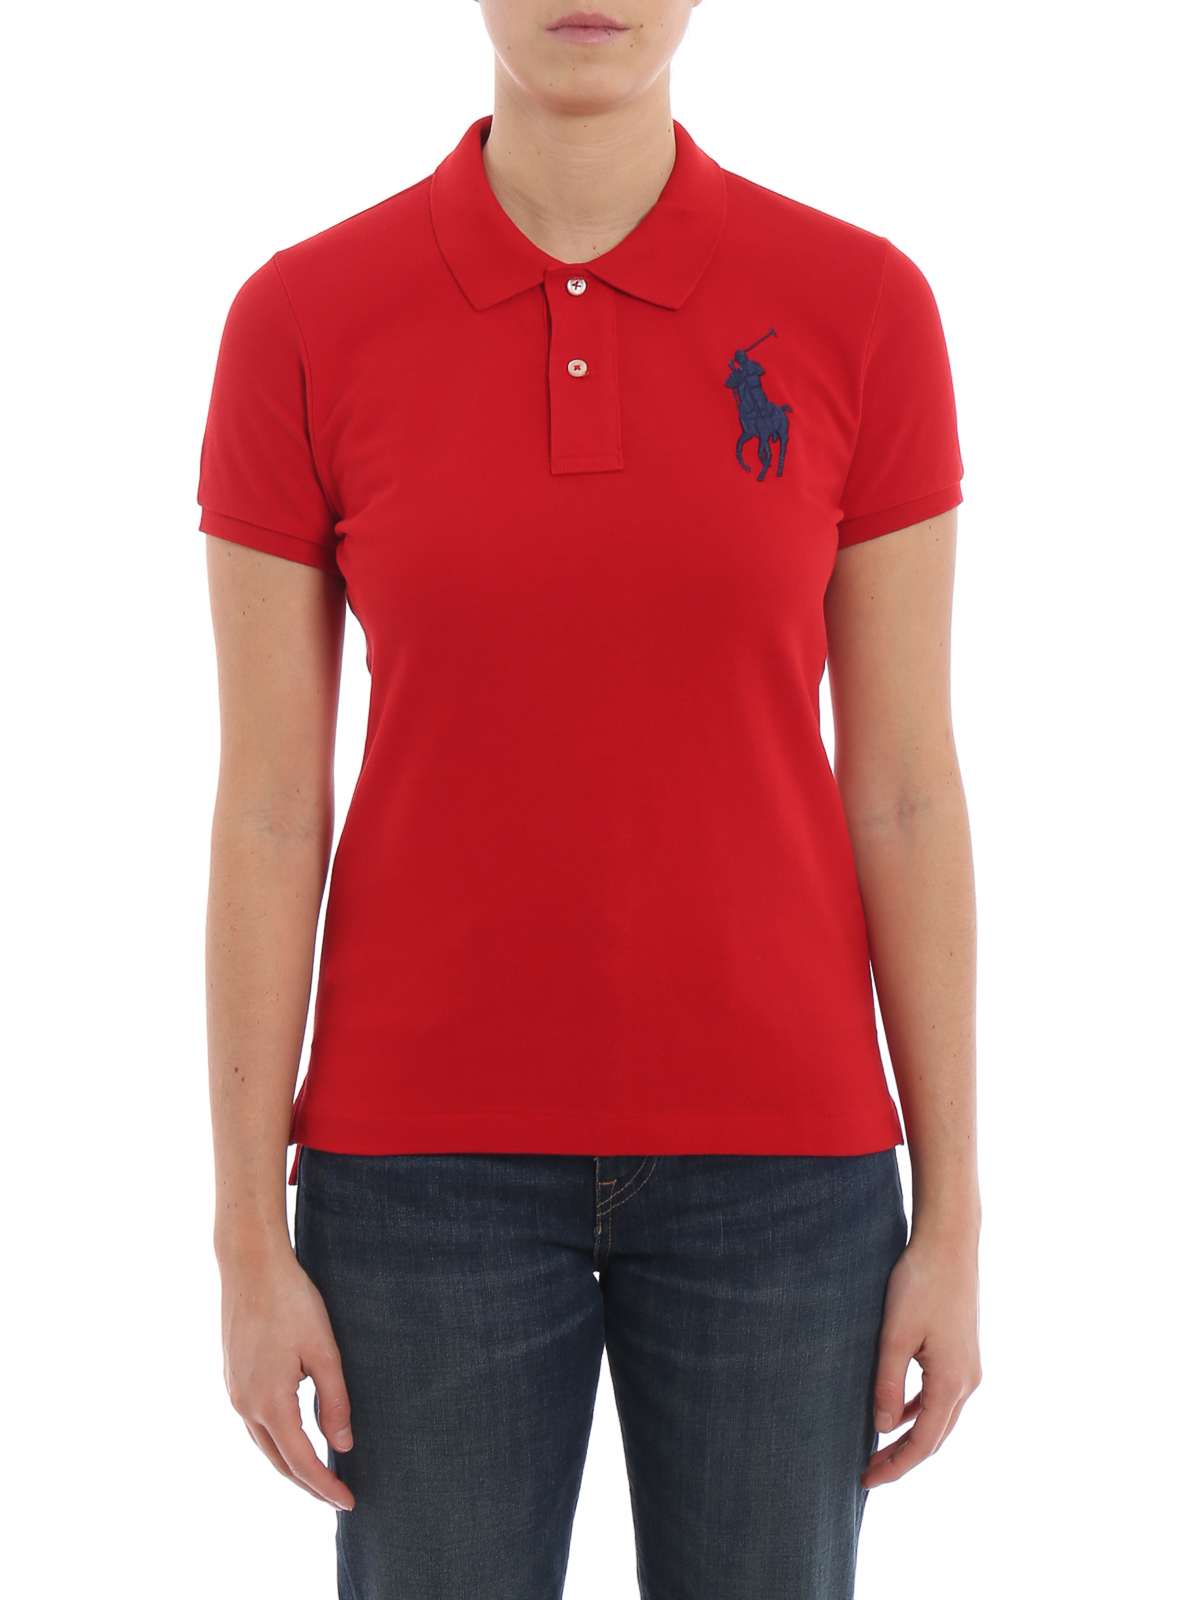 polo shirts ralph lauren red